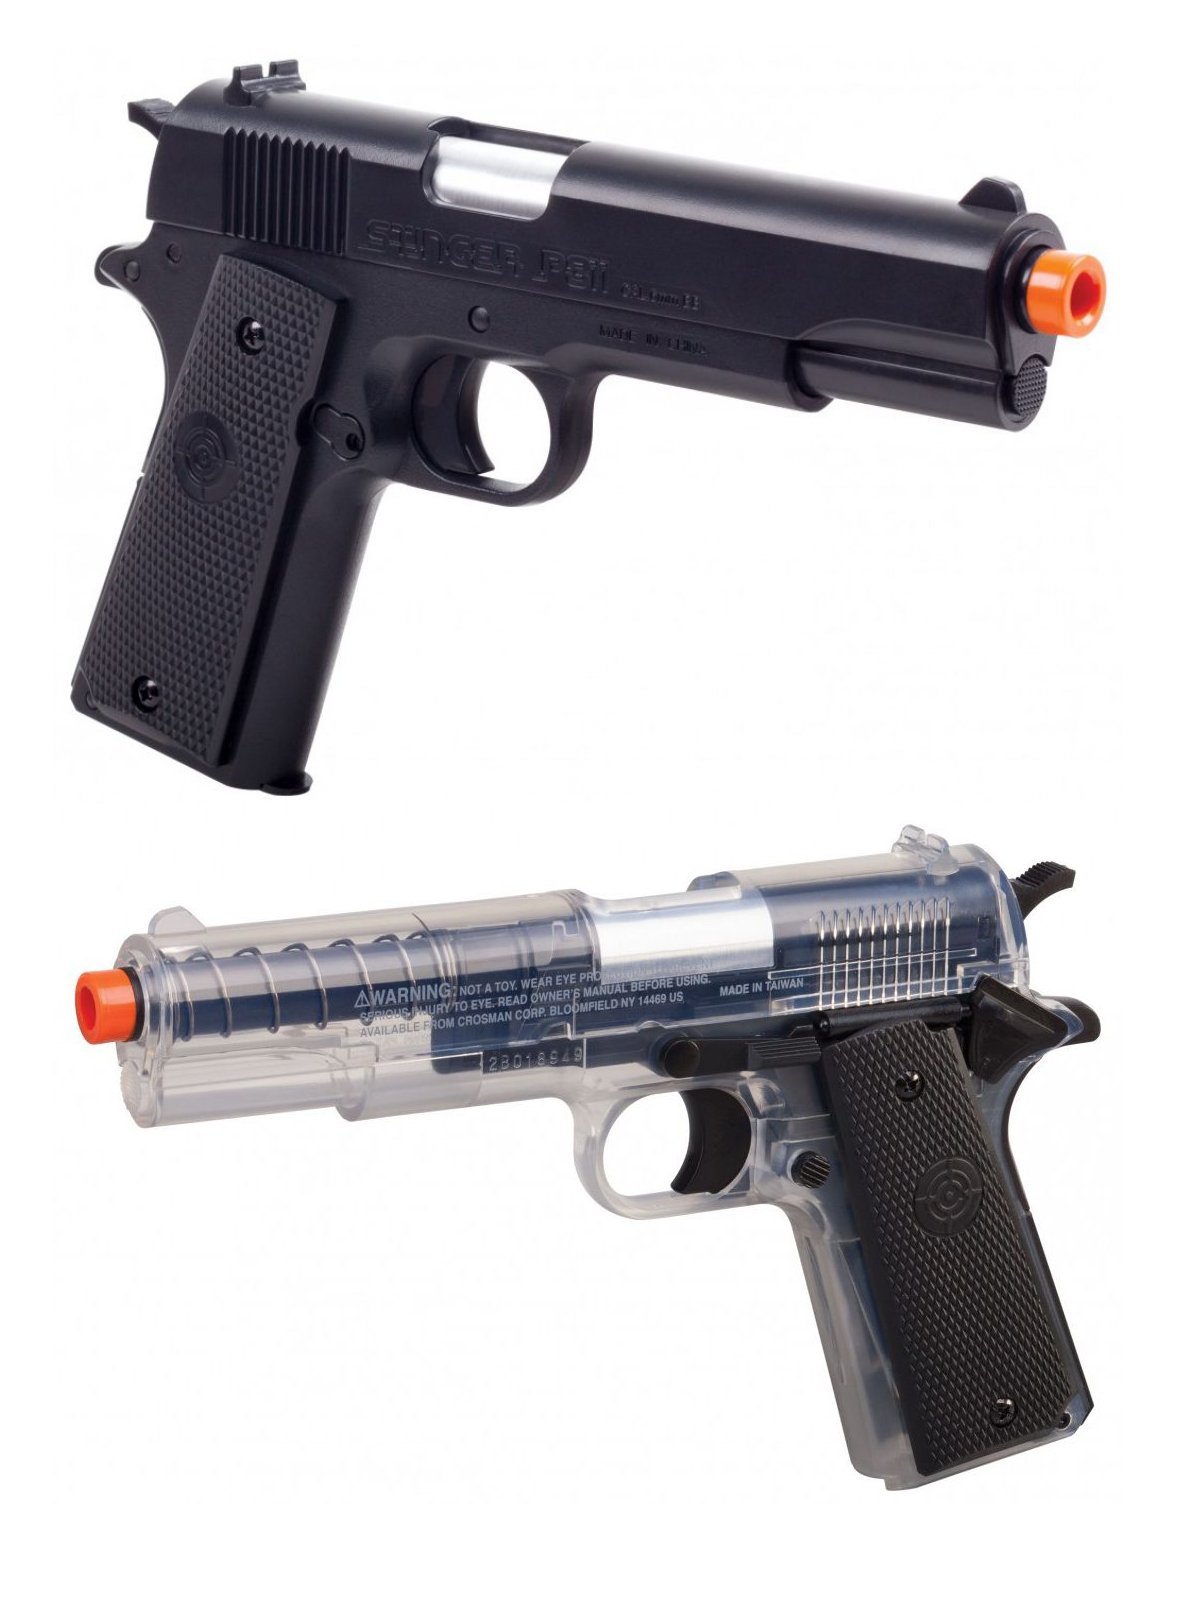 Resembling popular US military pistols of the past, this Crosman Stinger P3...